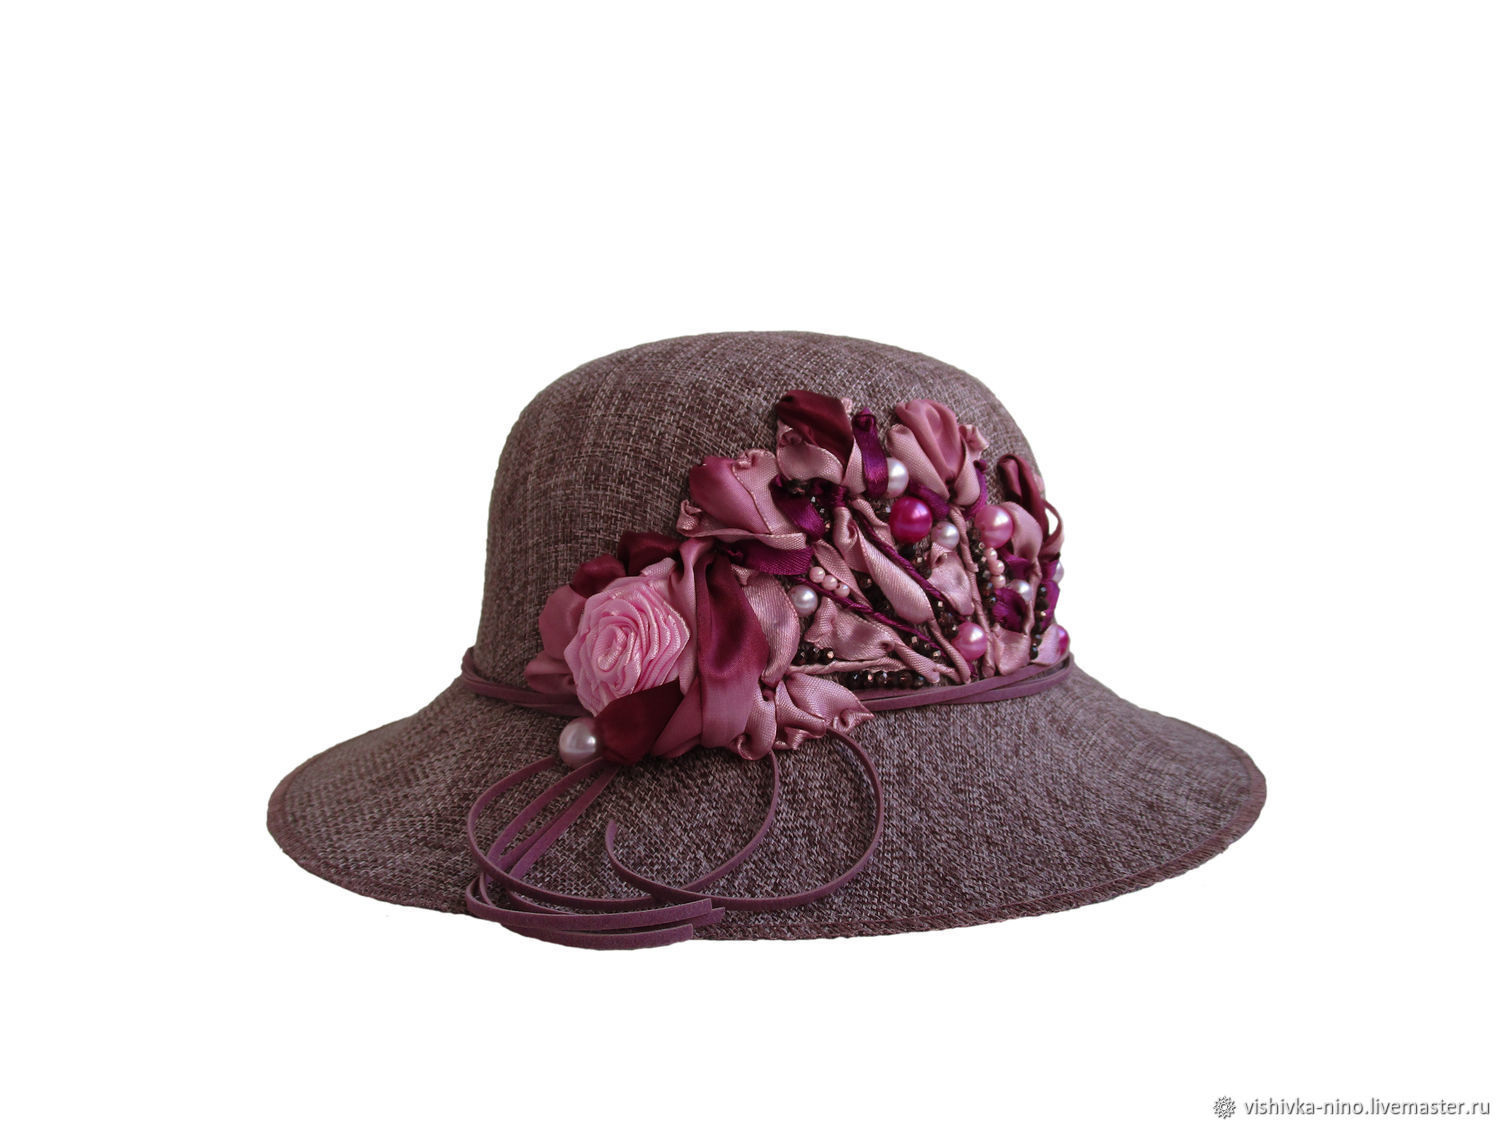 Women's summer bordeaux hat with roses WINTER CHERRY, Hats1, Nizhny Novgorod,  Фото №1